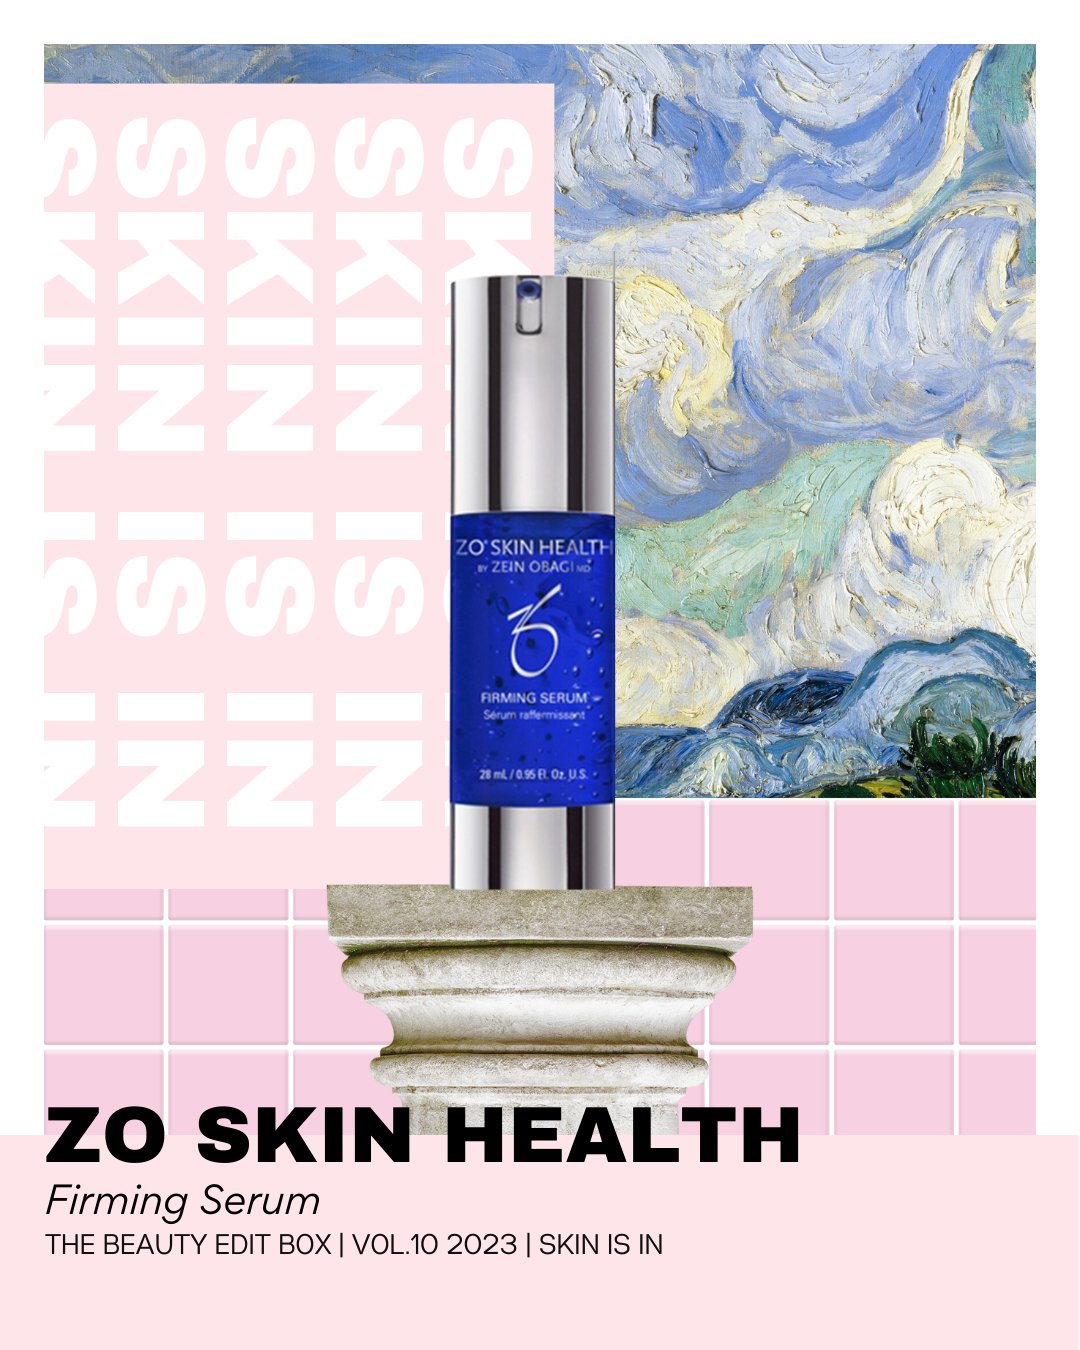 Inside The Beauty Edit Box Vol. 10: ZO Skin Health